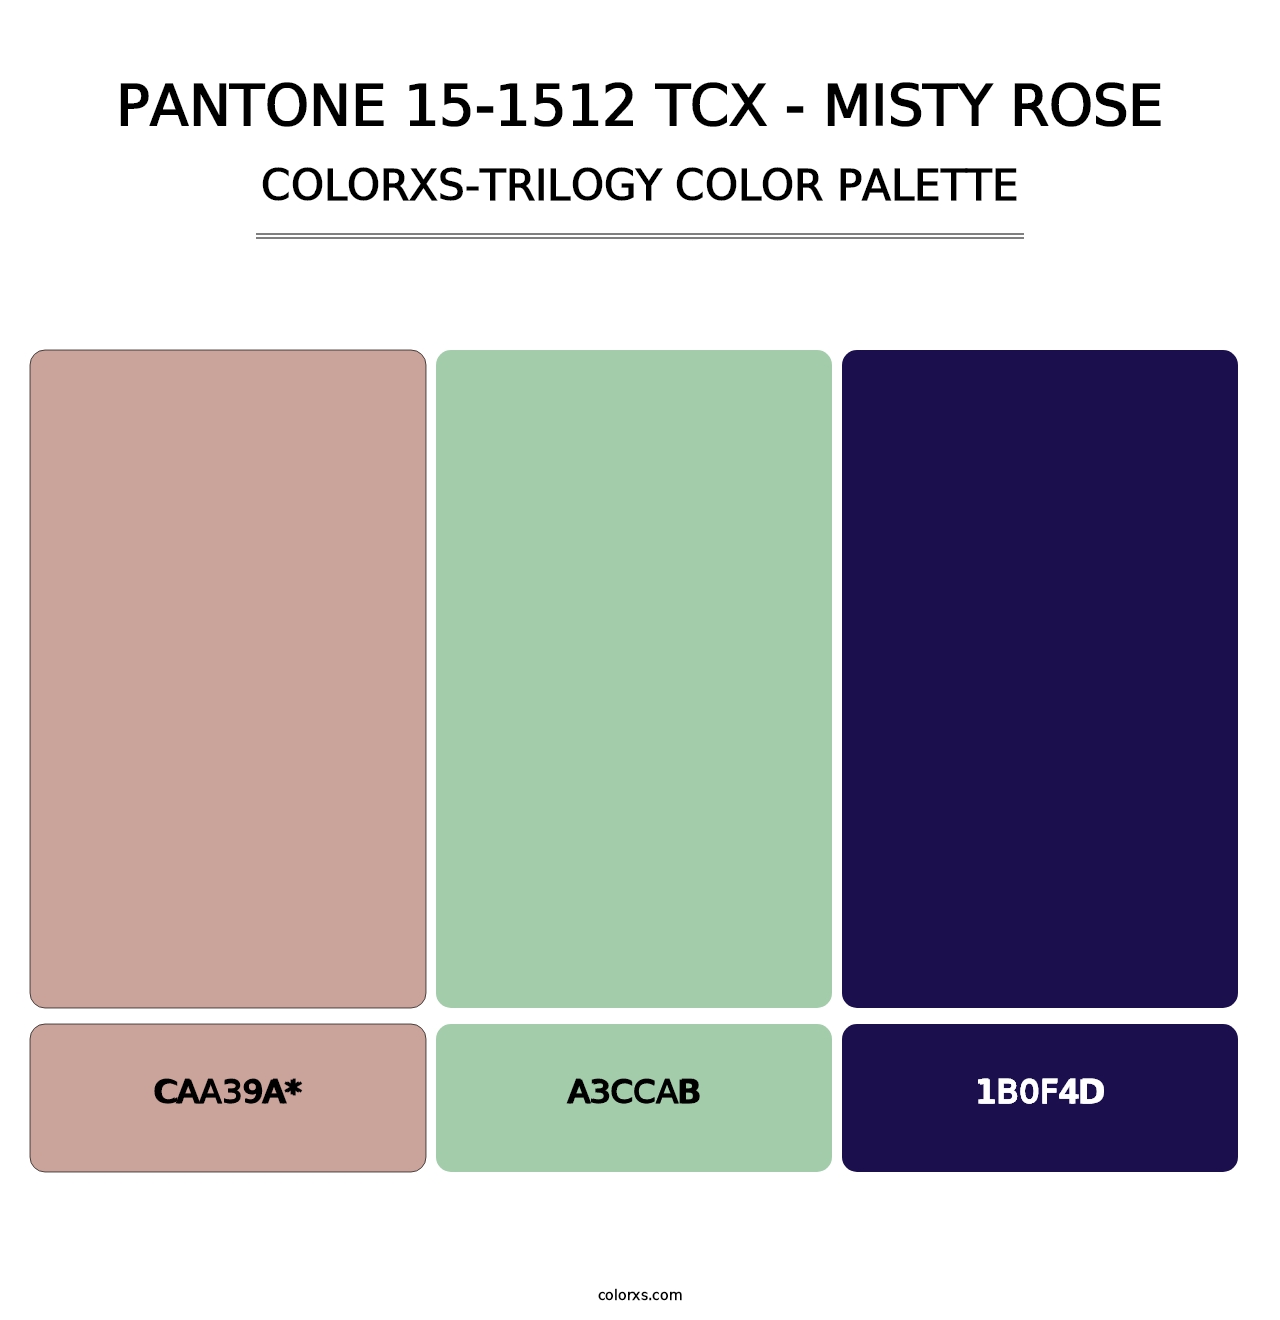 PANTONE 15-1512 TCX - Misty Rose - Colorxs Trilogy Palette